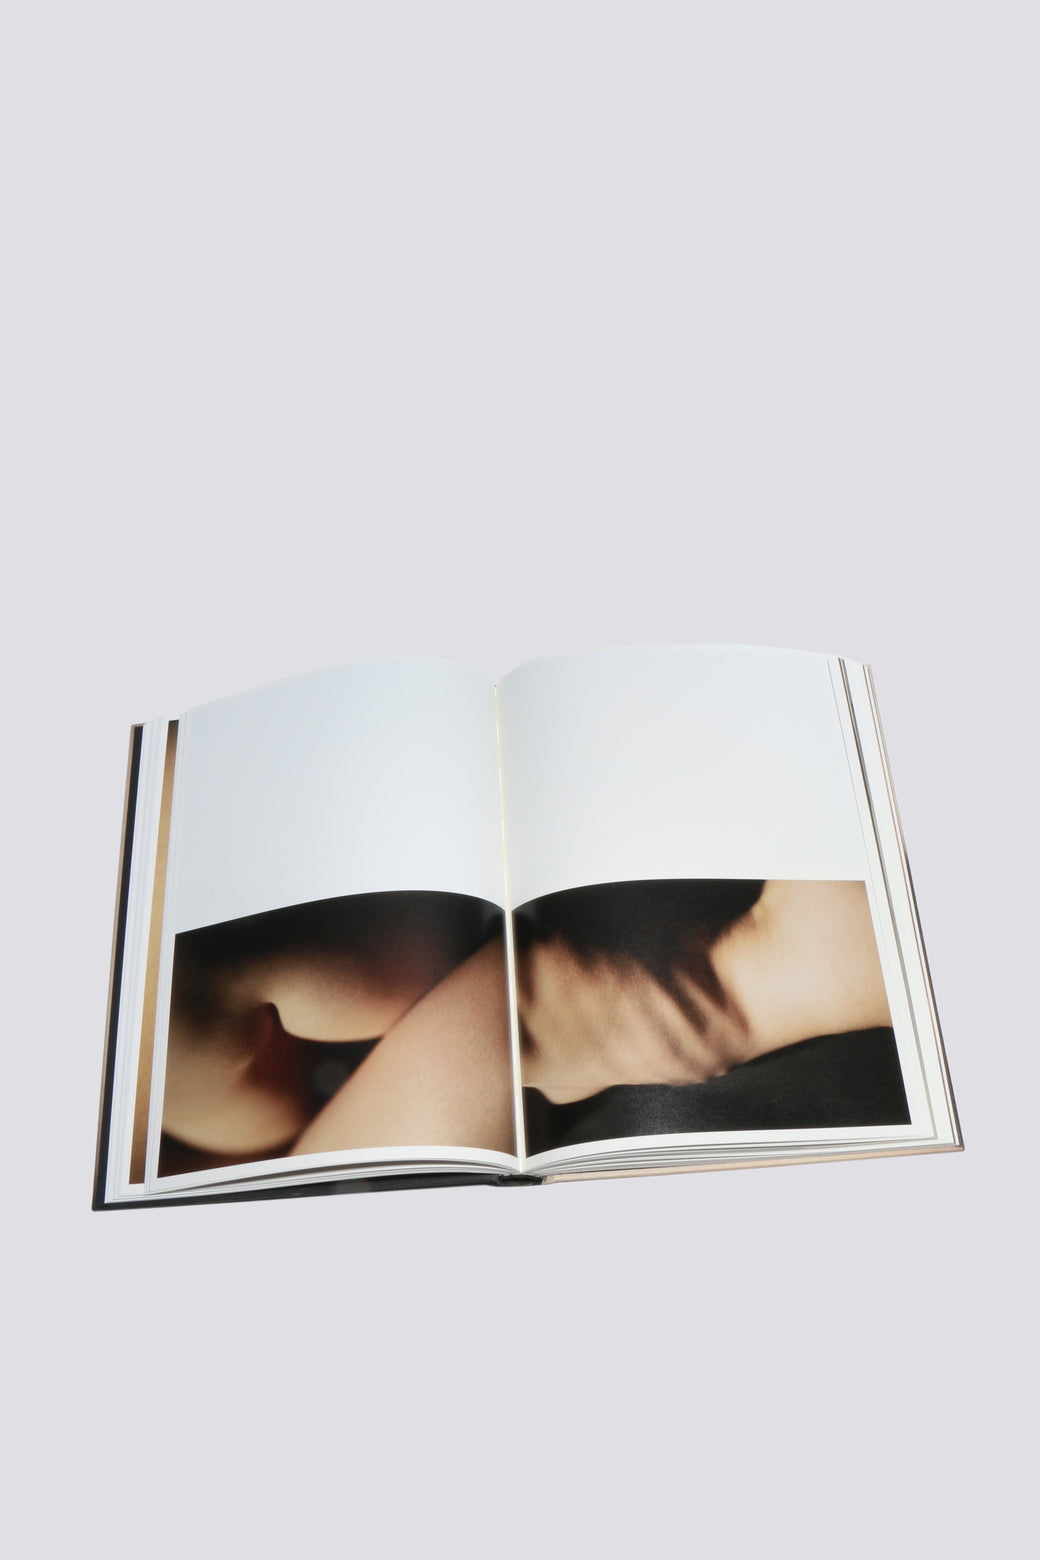 David Lynch Nudes Hardcover-